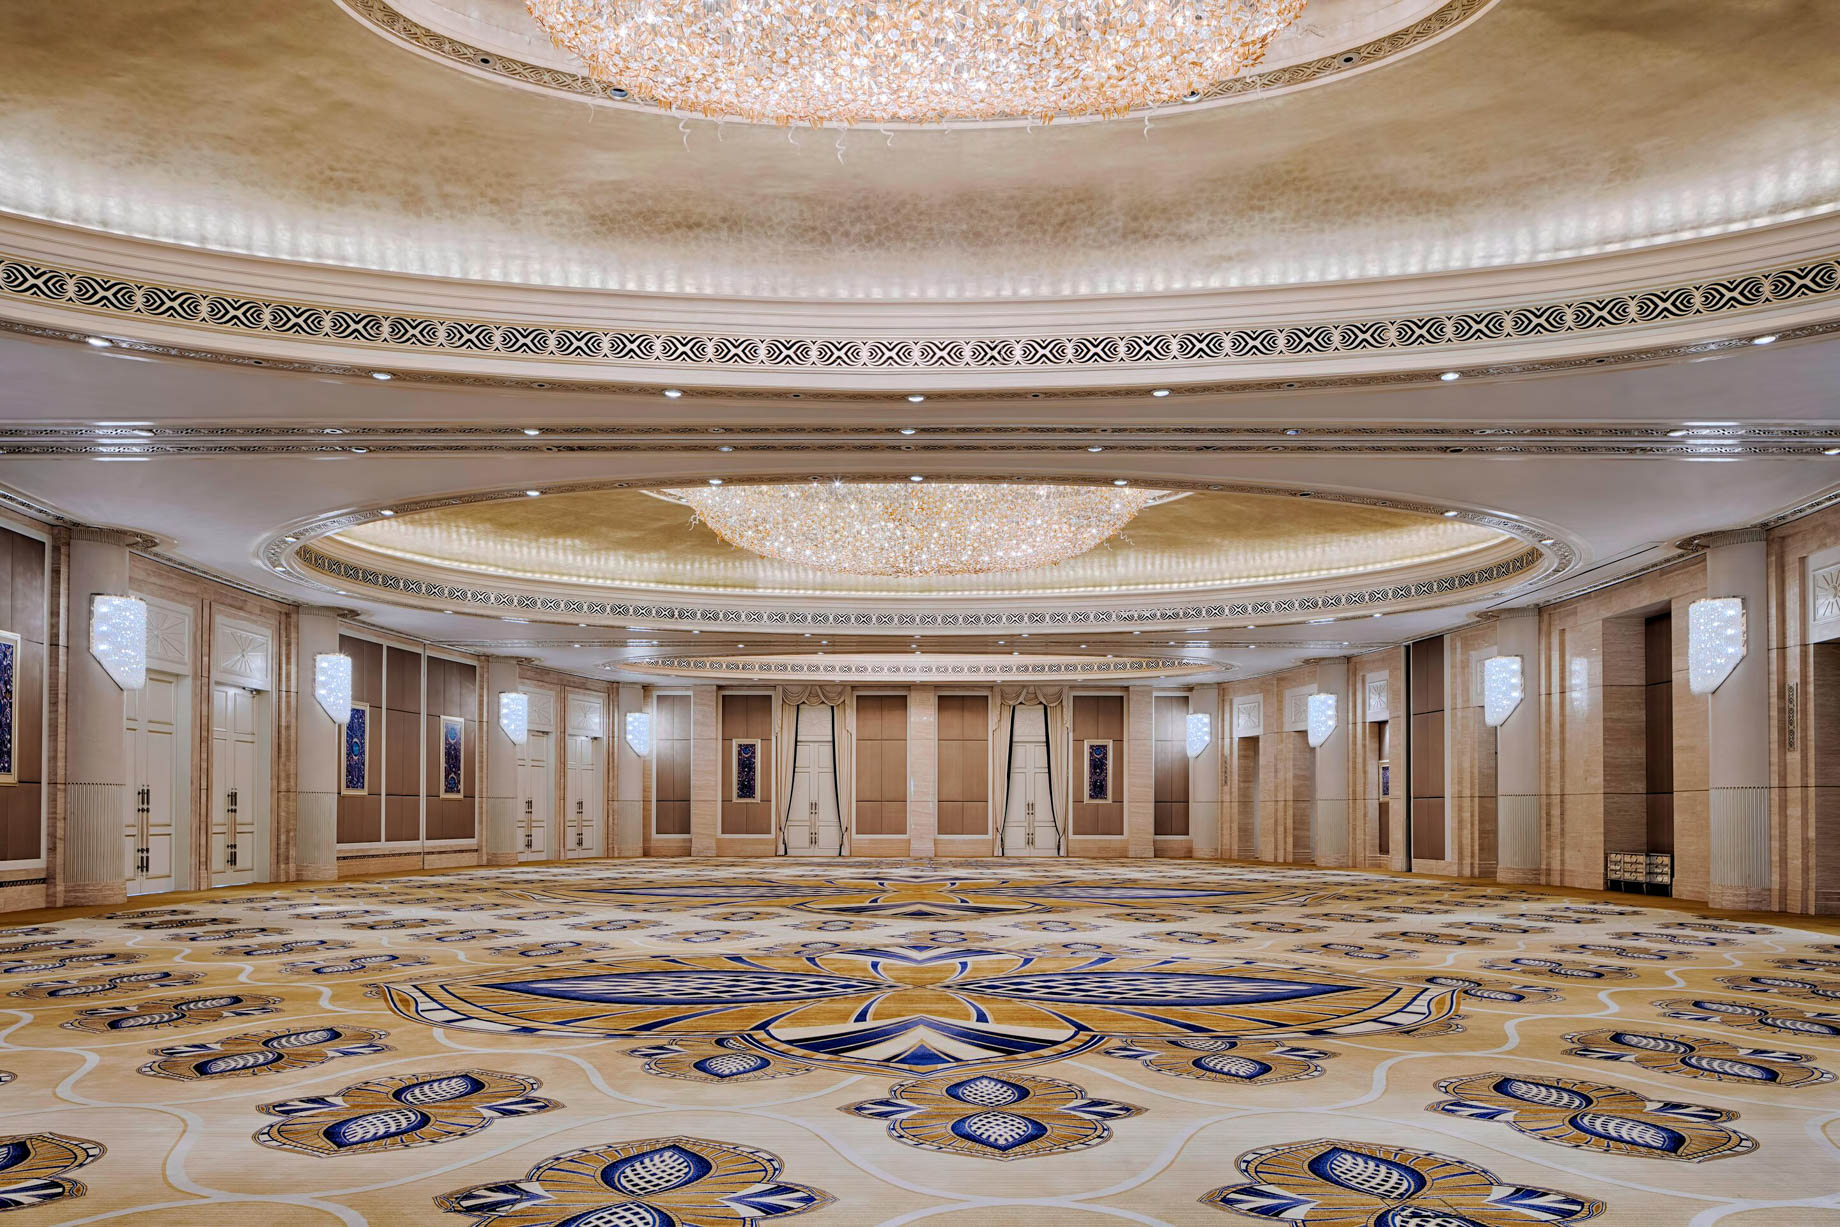 The St. Regis Abu Dhabi Hotel - Abu Dhabi, United Arab Emirates - Ballroom